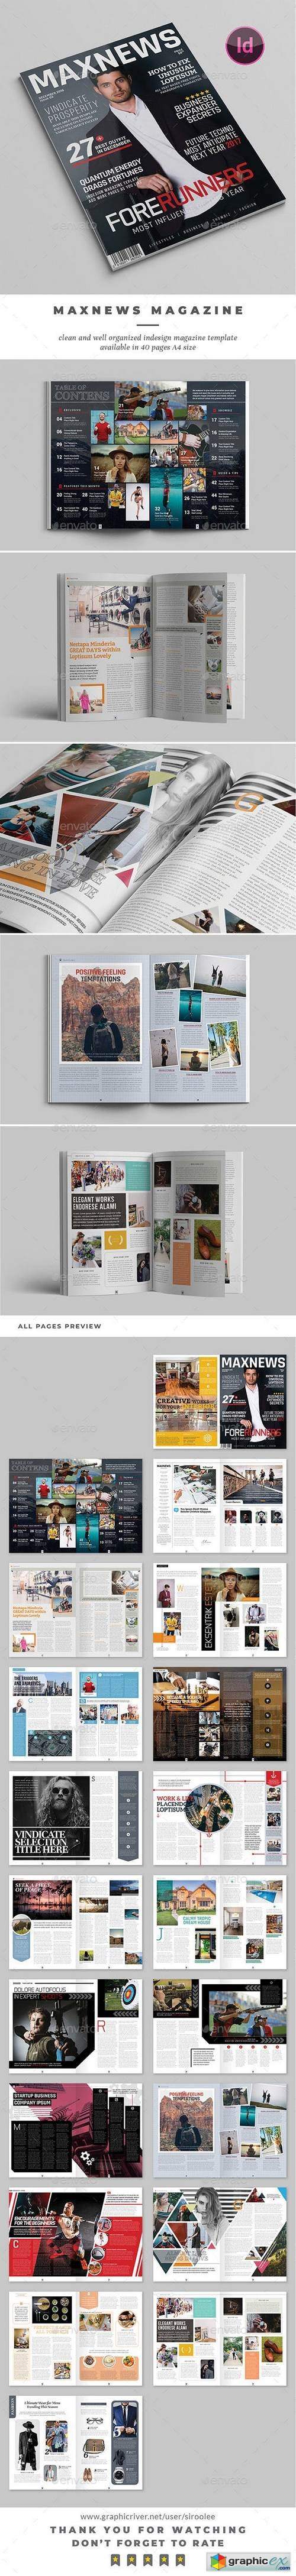 Maxnews Magazine